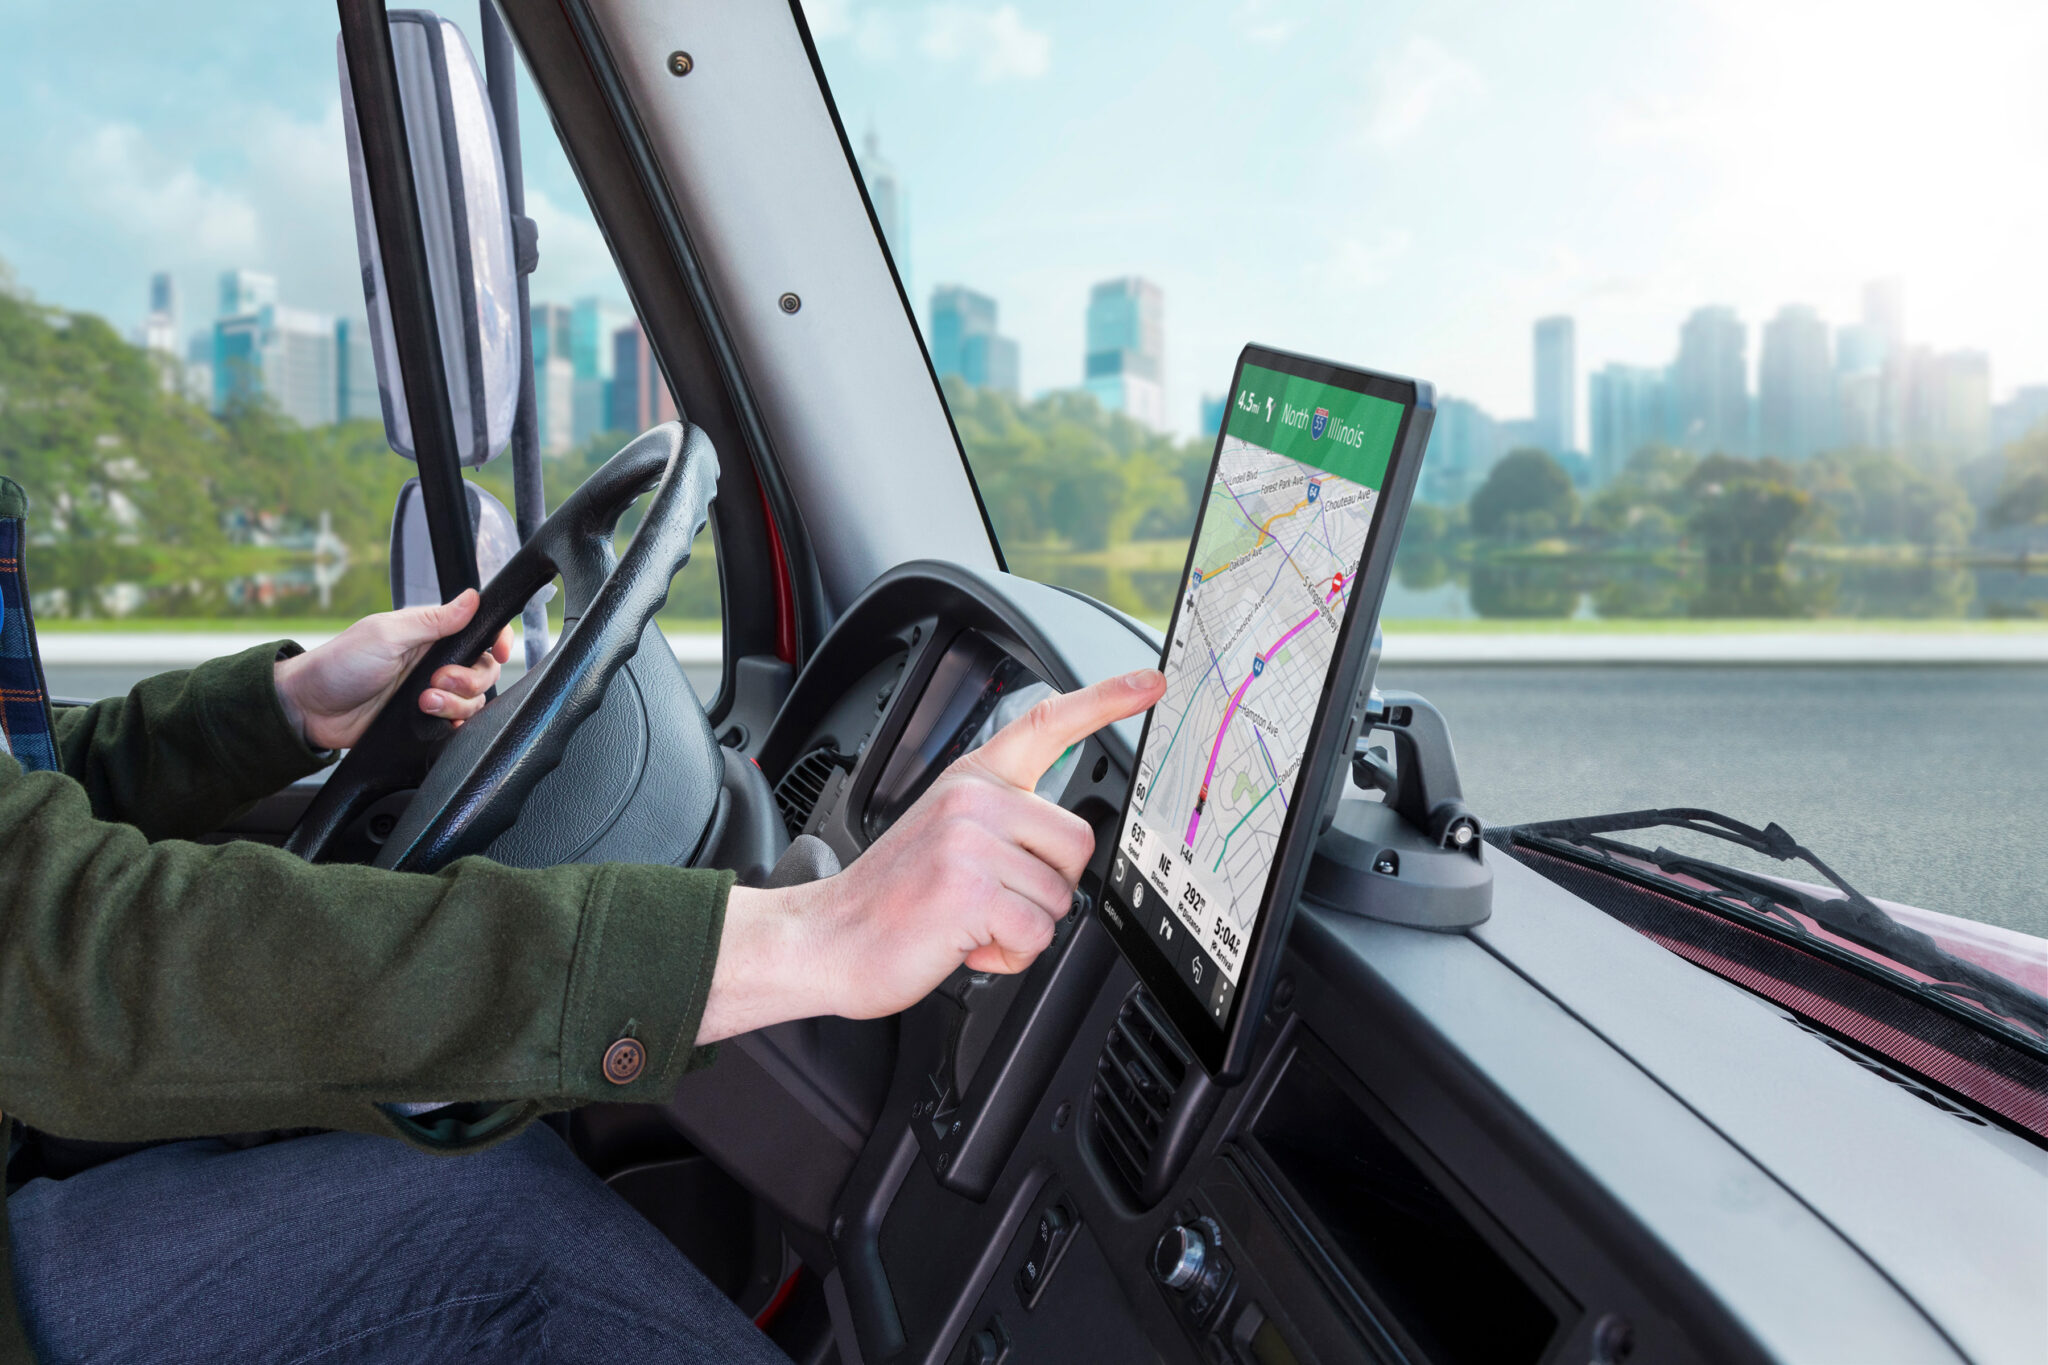 Garmin new series of oversized truck navigators for OTR drivers - TheTrucker.com